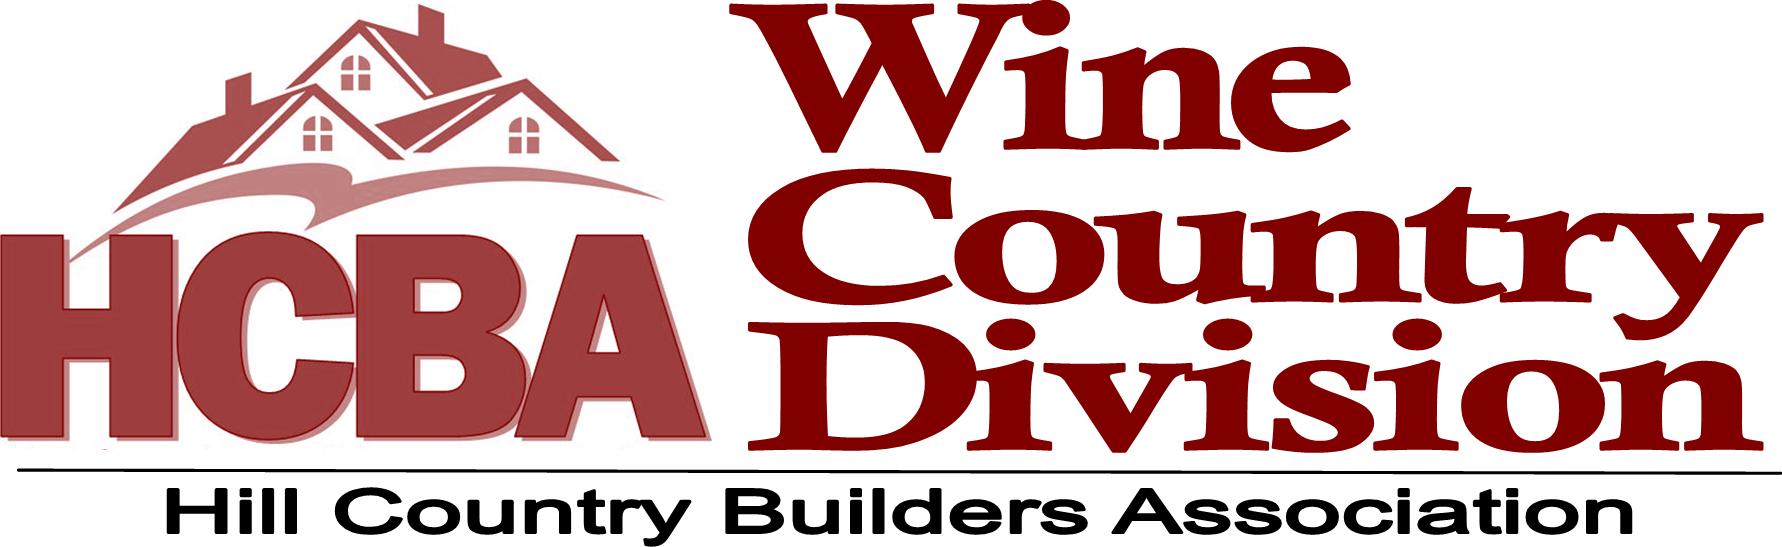 Wine Country Logo DRAFT.jpg